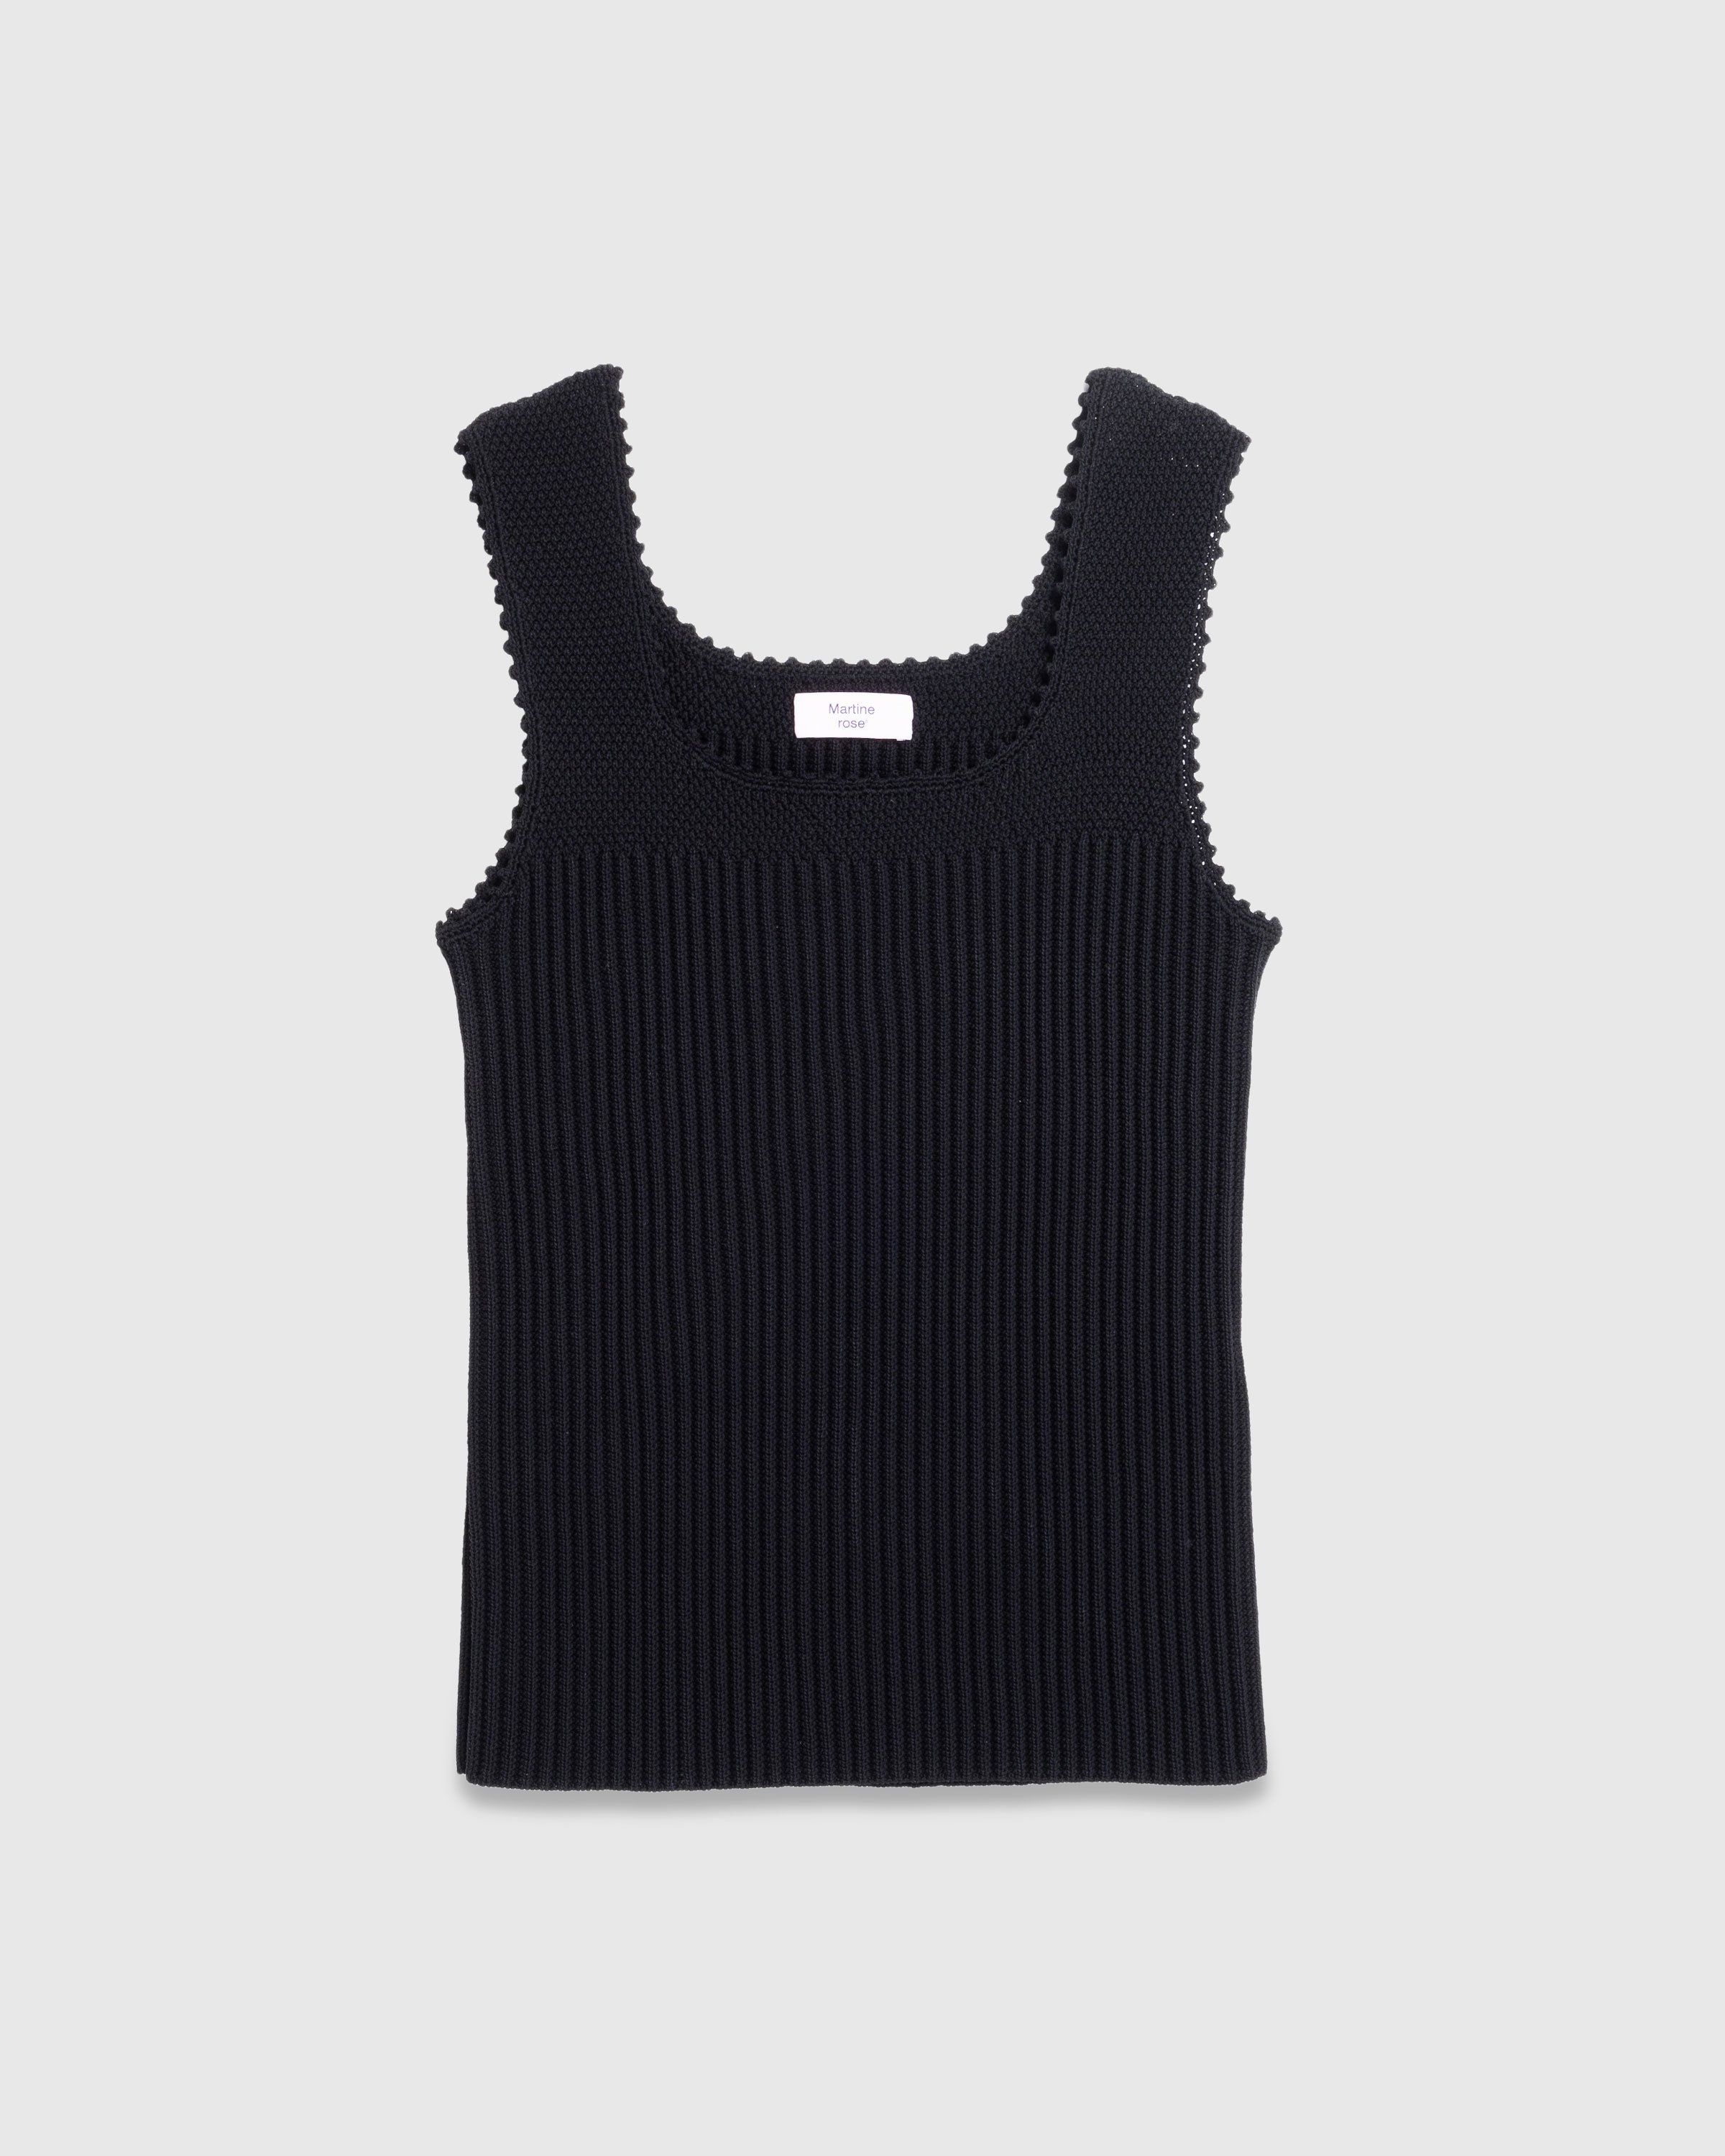 Martine Rose - Crochet Vest Black - Clothing - Black - Image 1